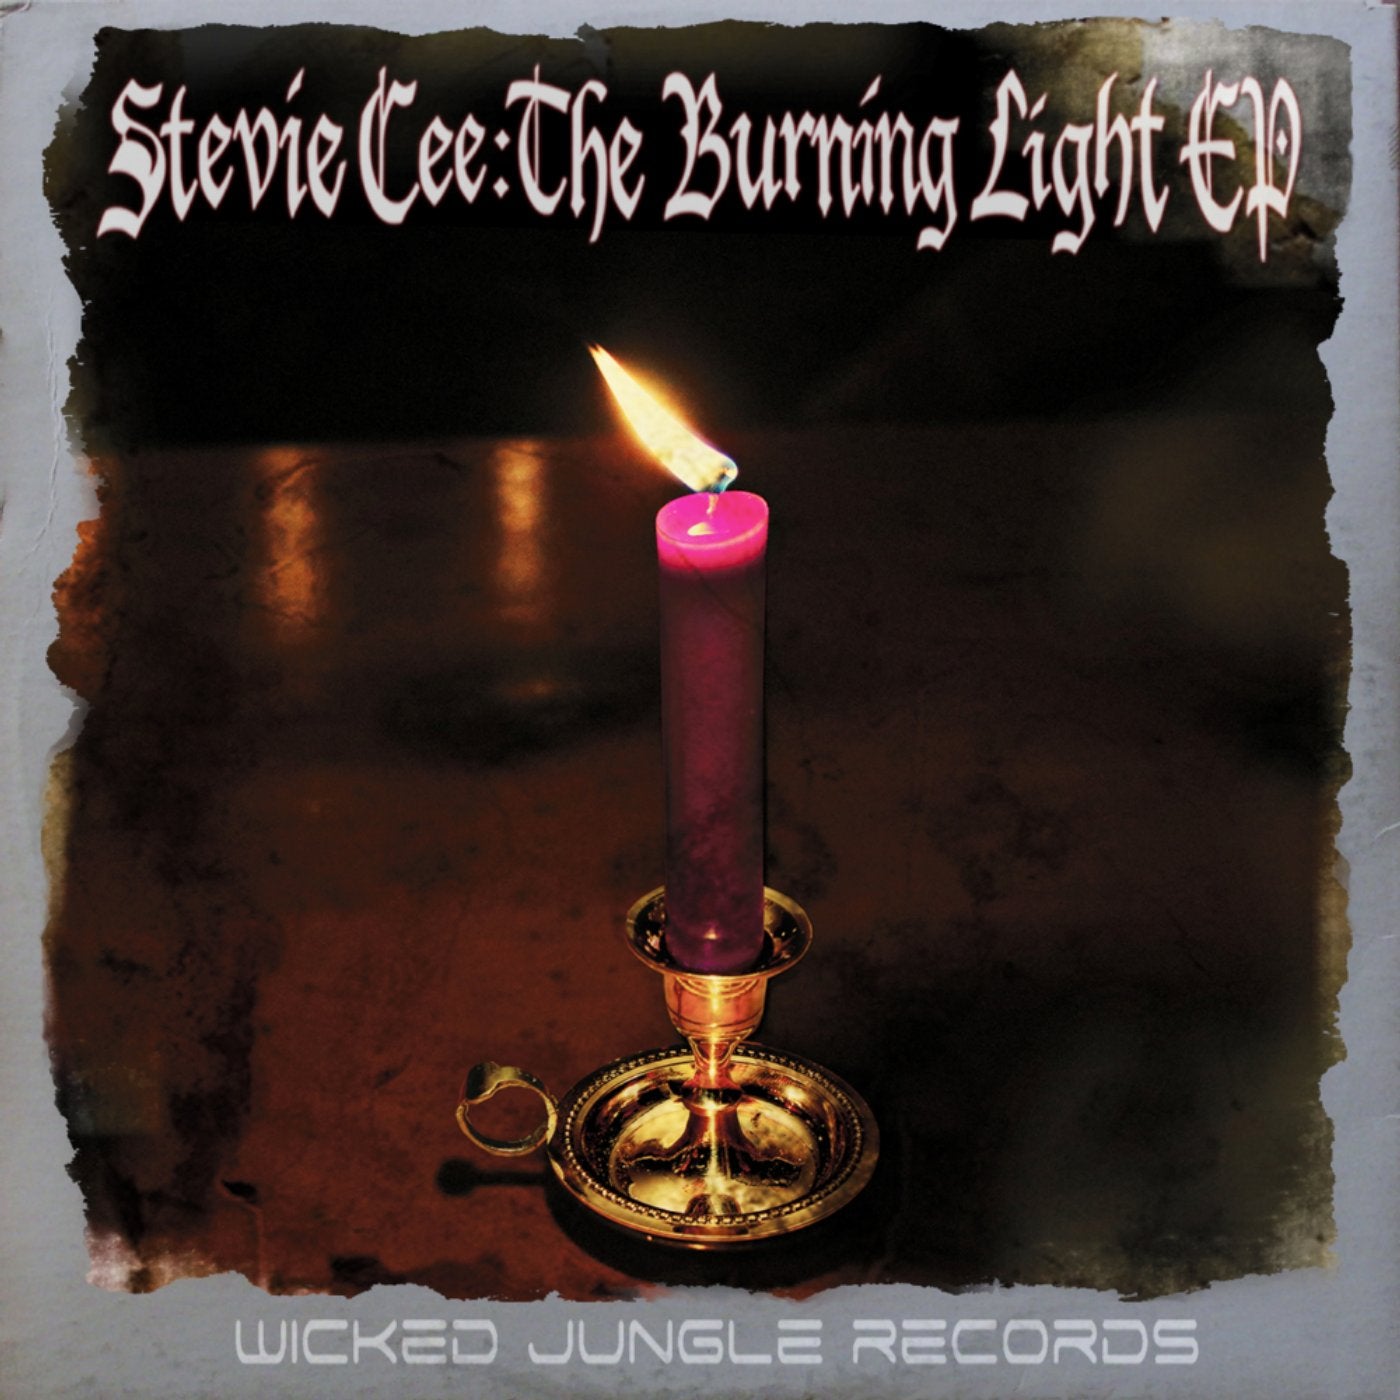 The Burning Light EP